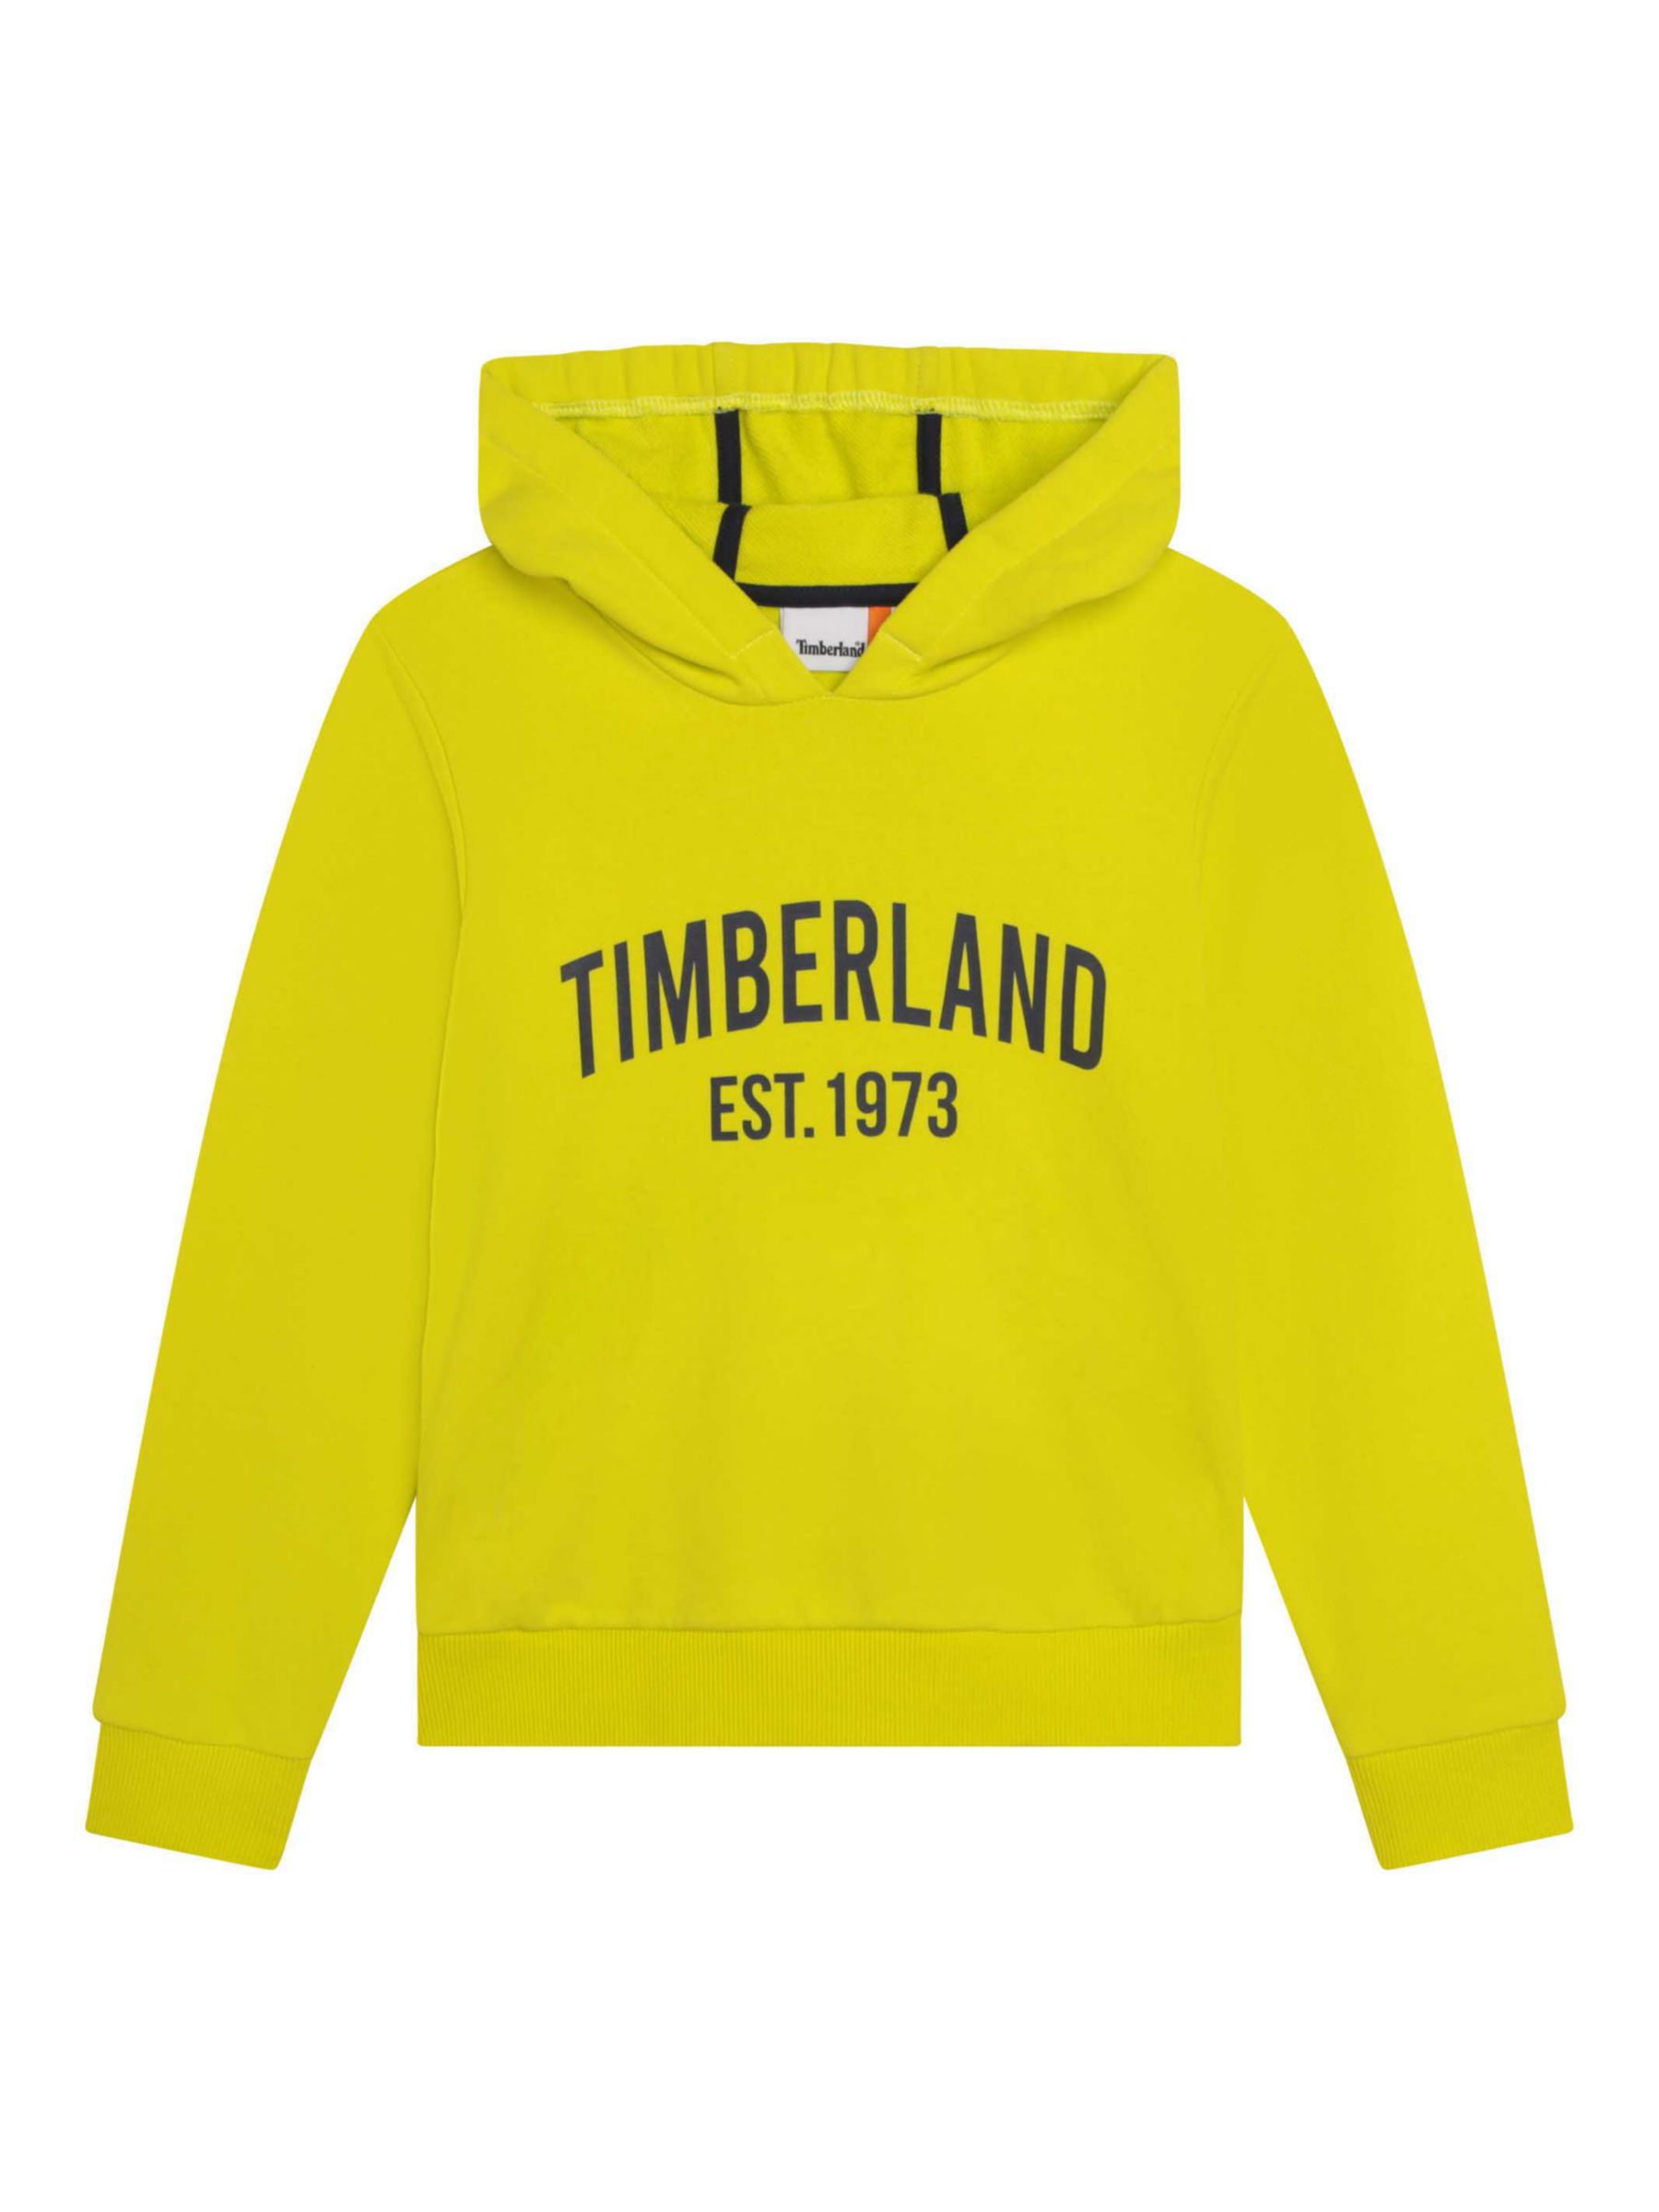 Timberland Kids' Logo Embroidered Hoodie, Yellow/Multi, 4 years